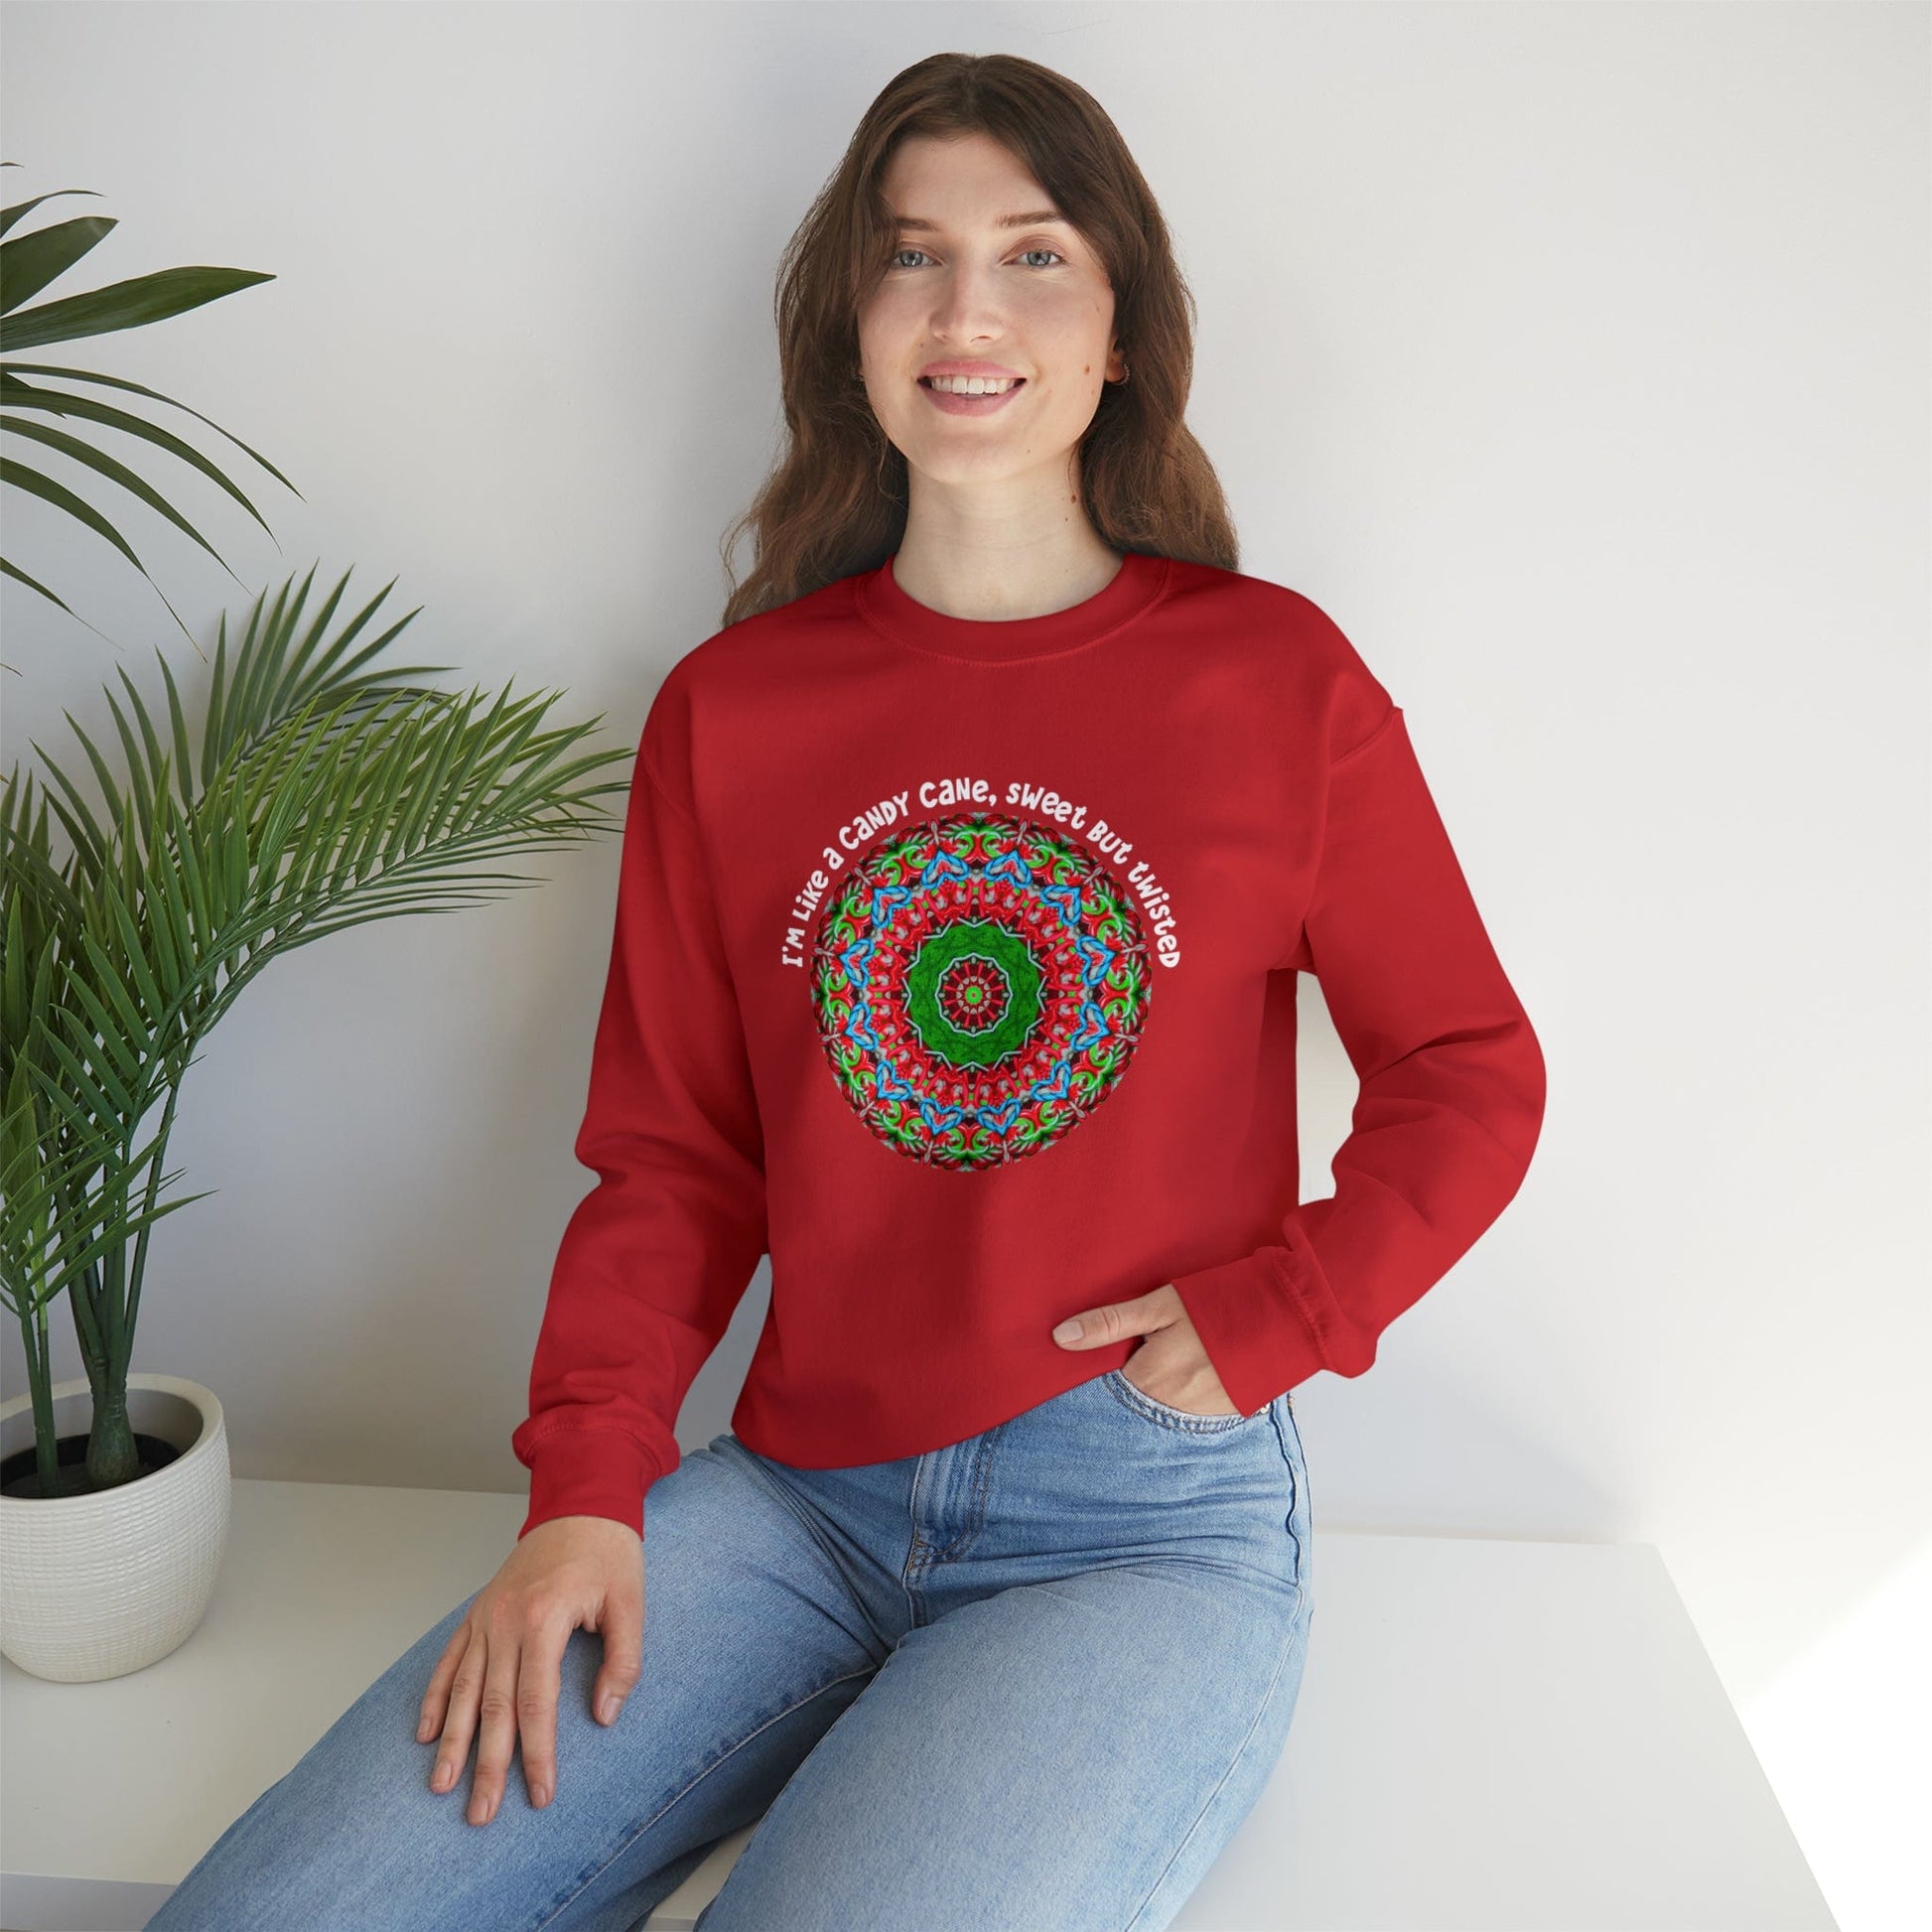 Cute & Funny Christmas Sweatshirt, Sarcastic Candy Cane Mandala Art Shirt, Im like a candy cane sweet but twisted RED